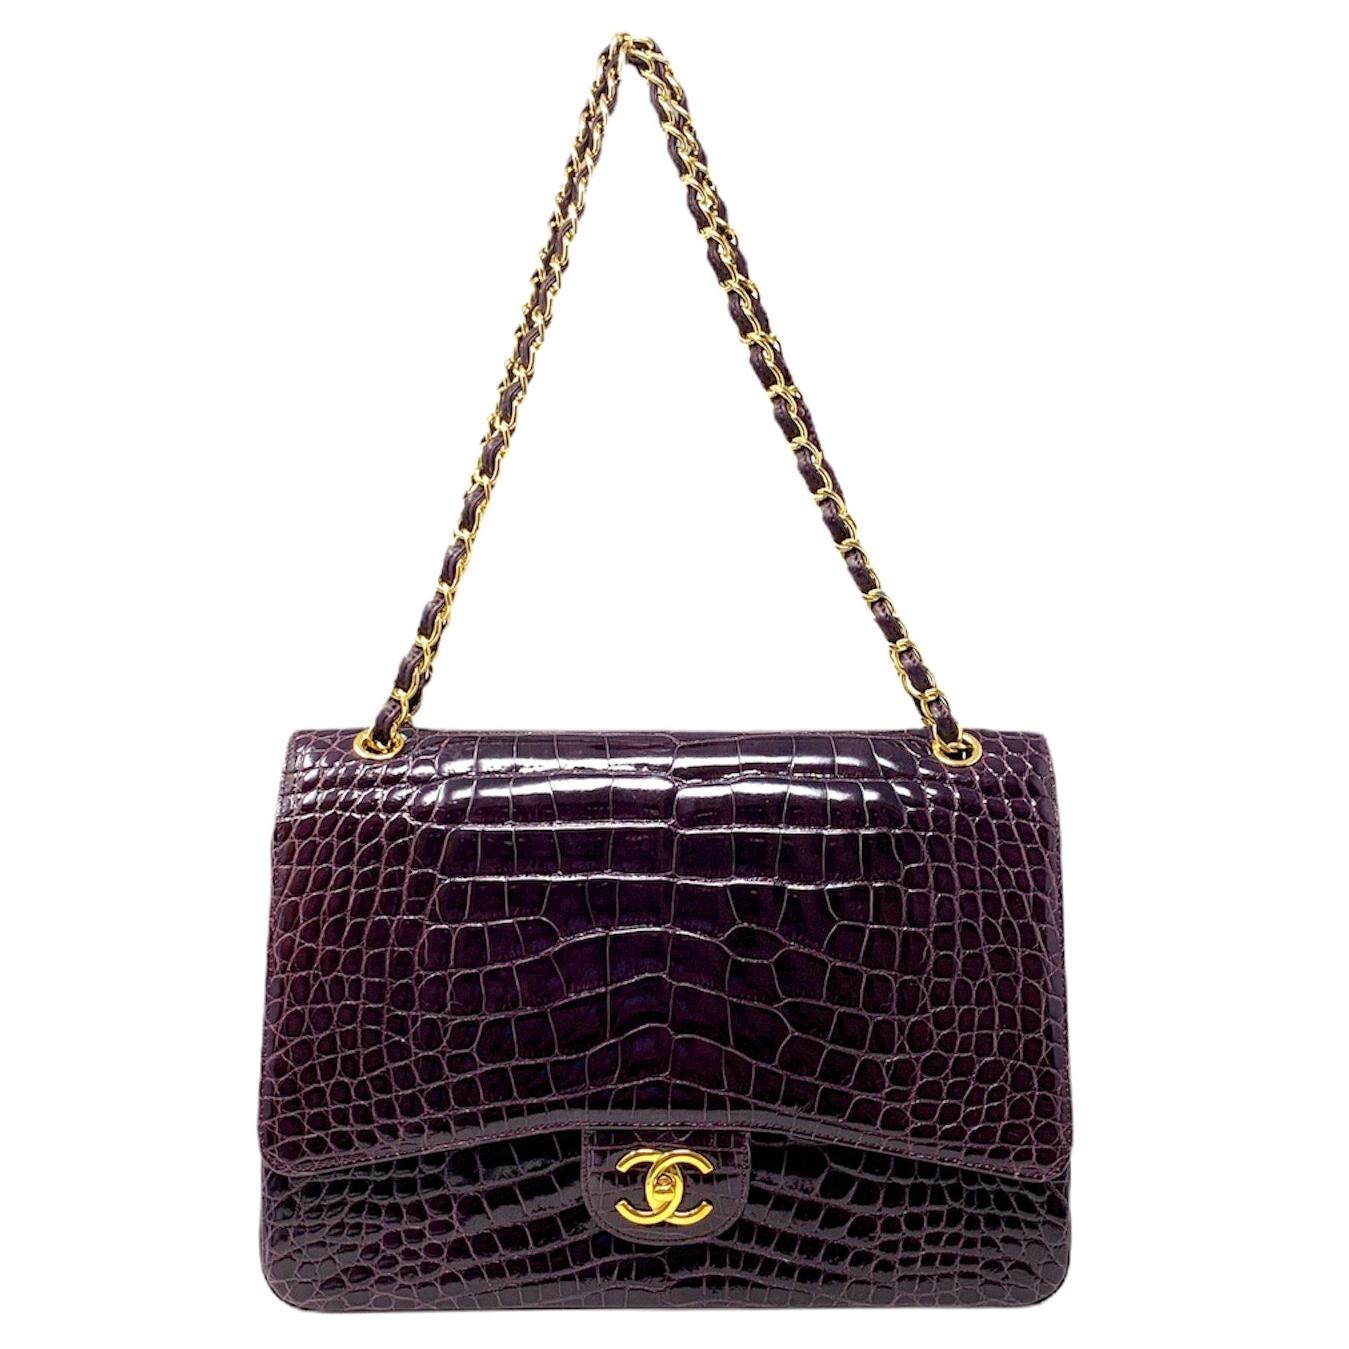 Jumbo Chanel Crocodile Handbag - For Sale on 1stDibs  chanel crocodile bag,  purple crocodile chanel bag, chanel crocodile flap bag